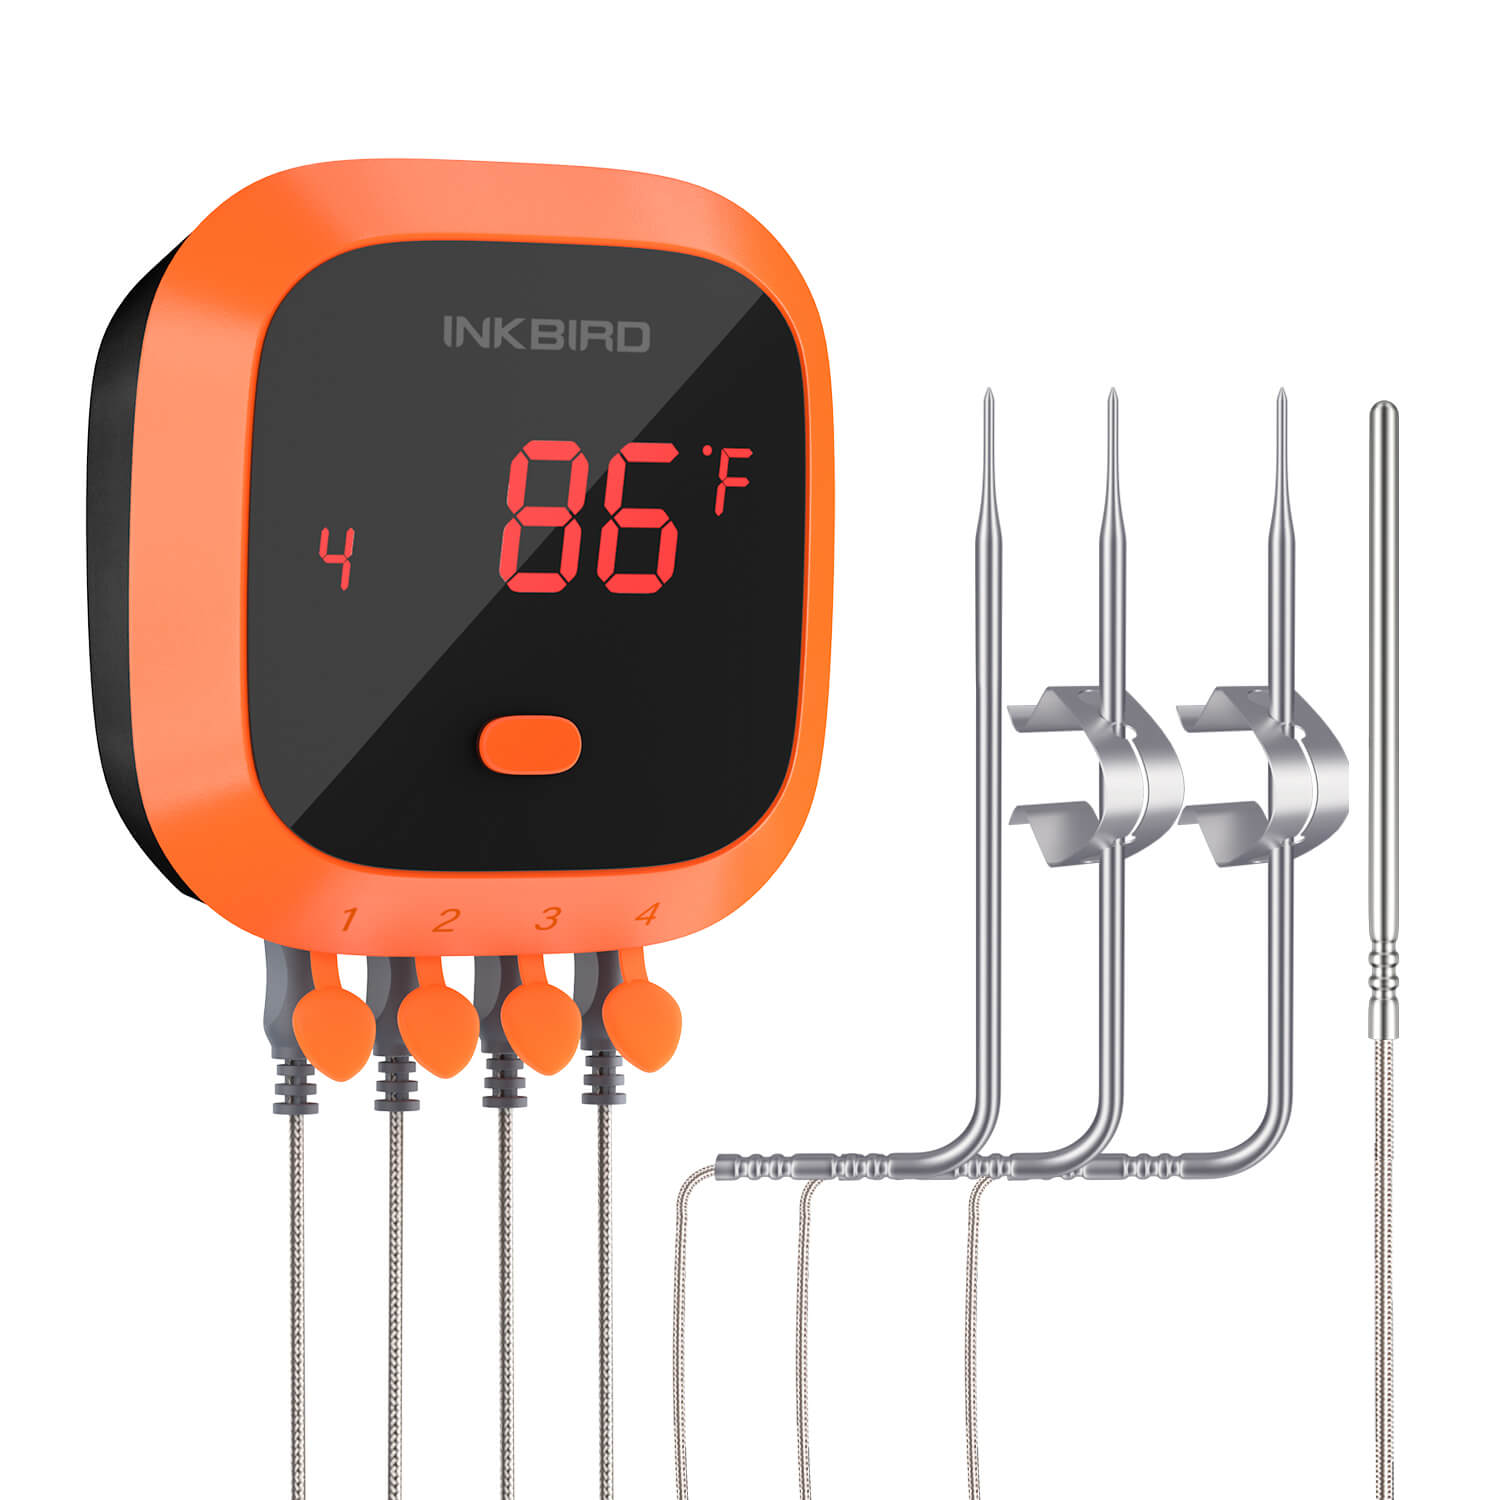 Inkbird Bluetooth Thermometer IBT 4XC